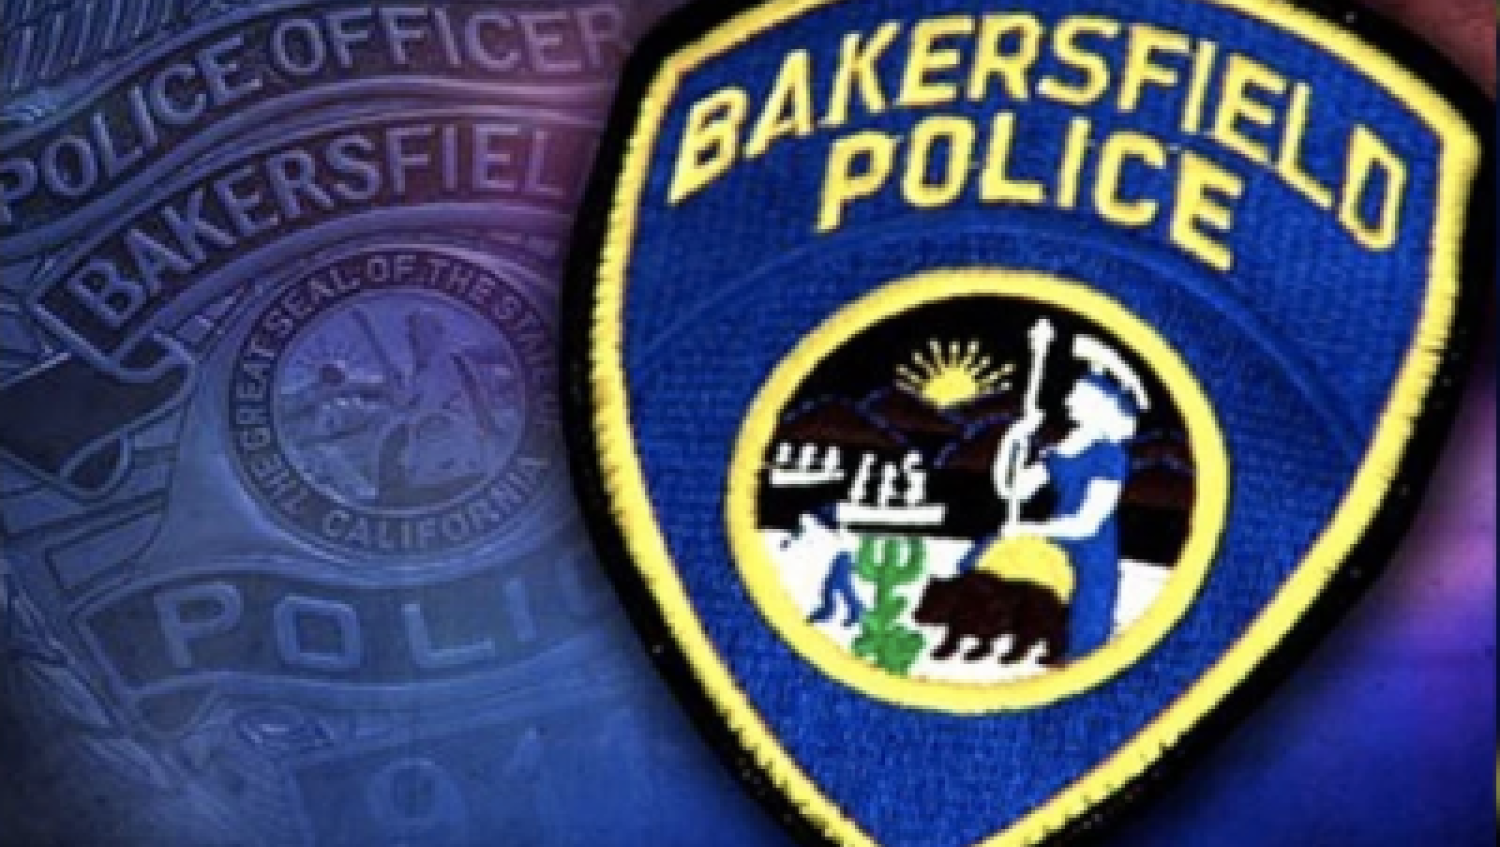 Bakersfield Police patch on dark purple background